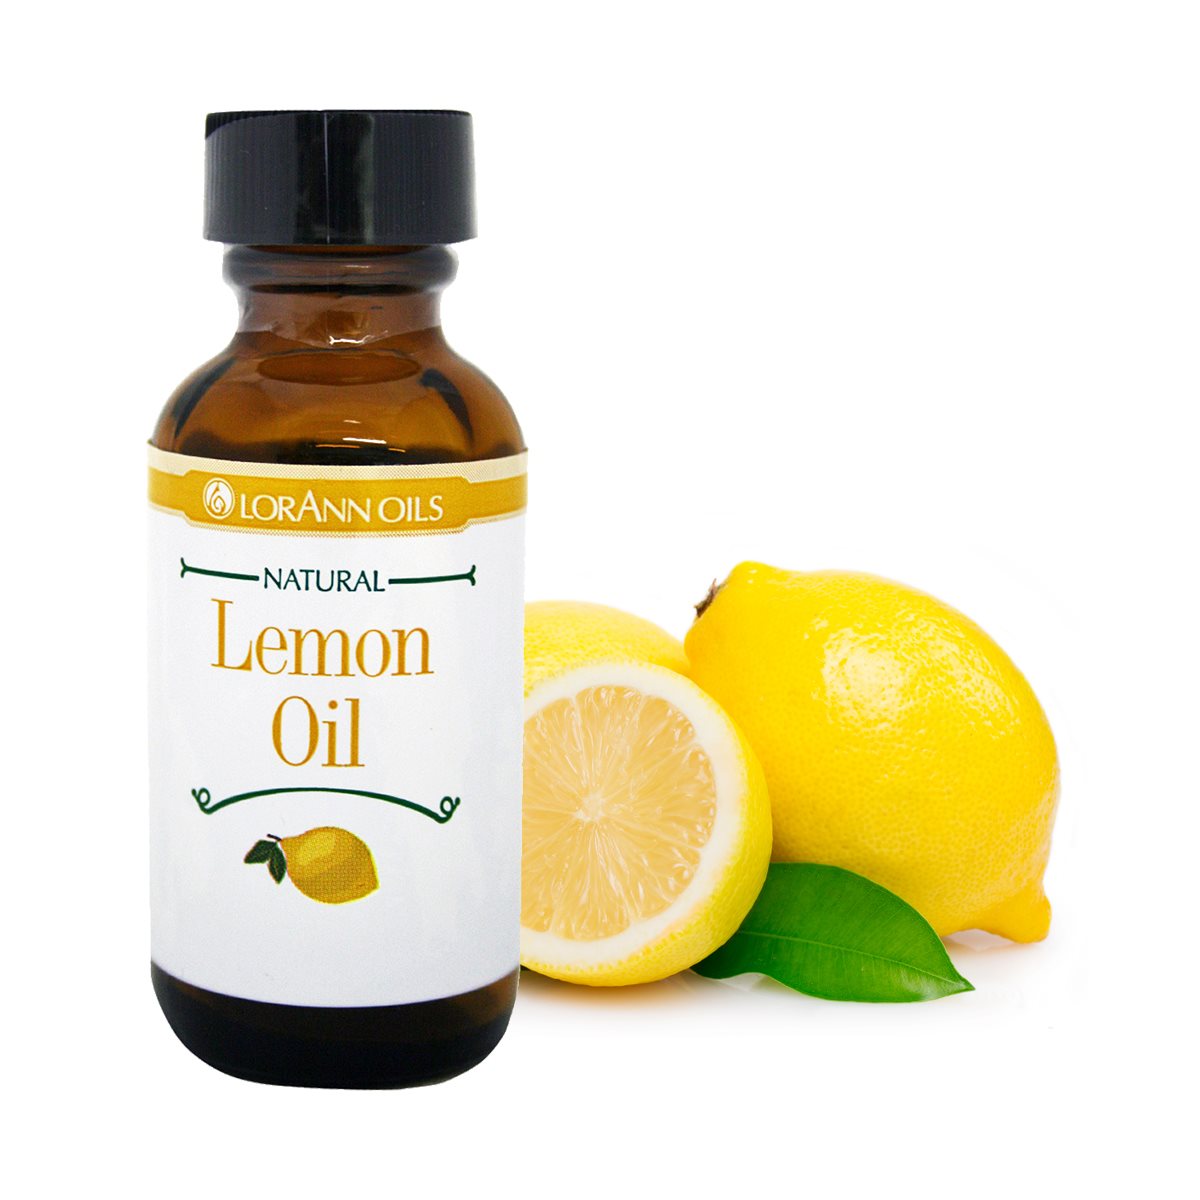 Lemon Oil Natural LorAnn Super Strength Flavor & Food Grade Oil